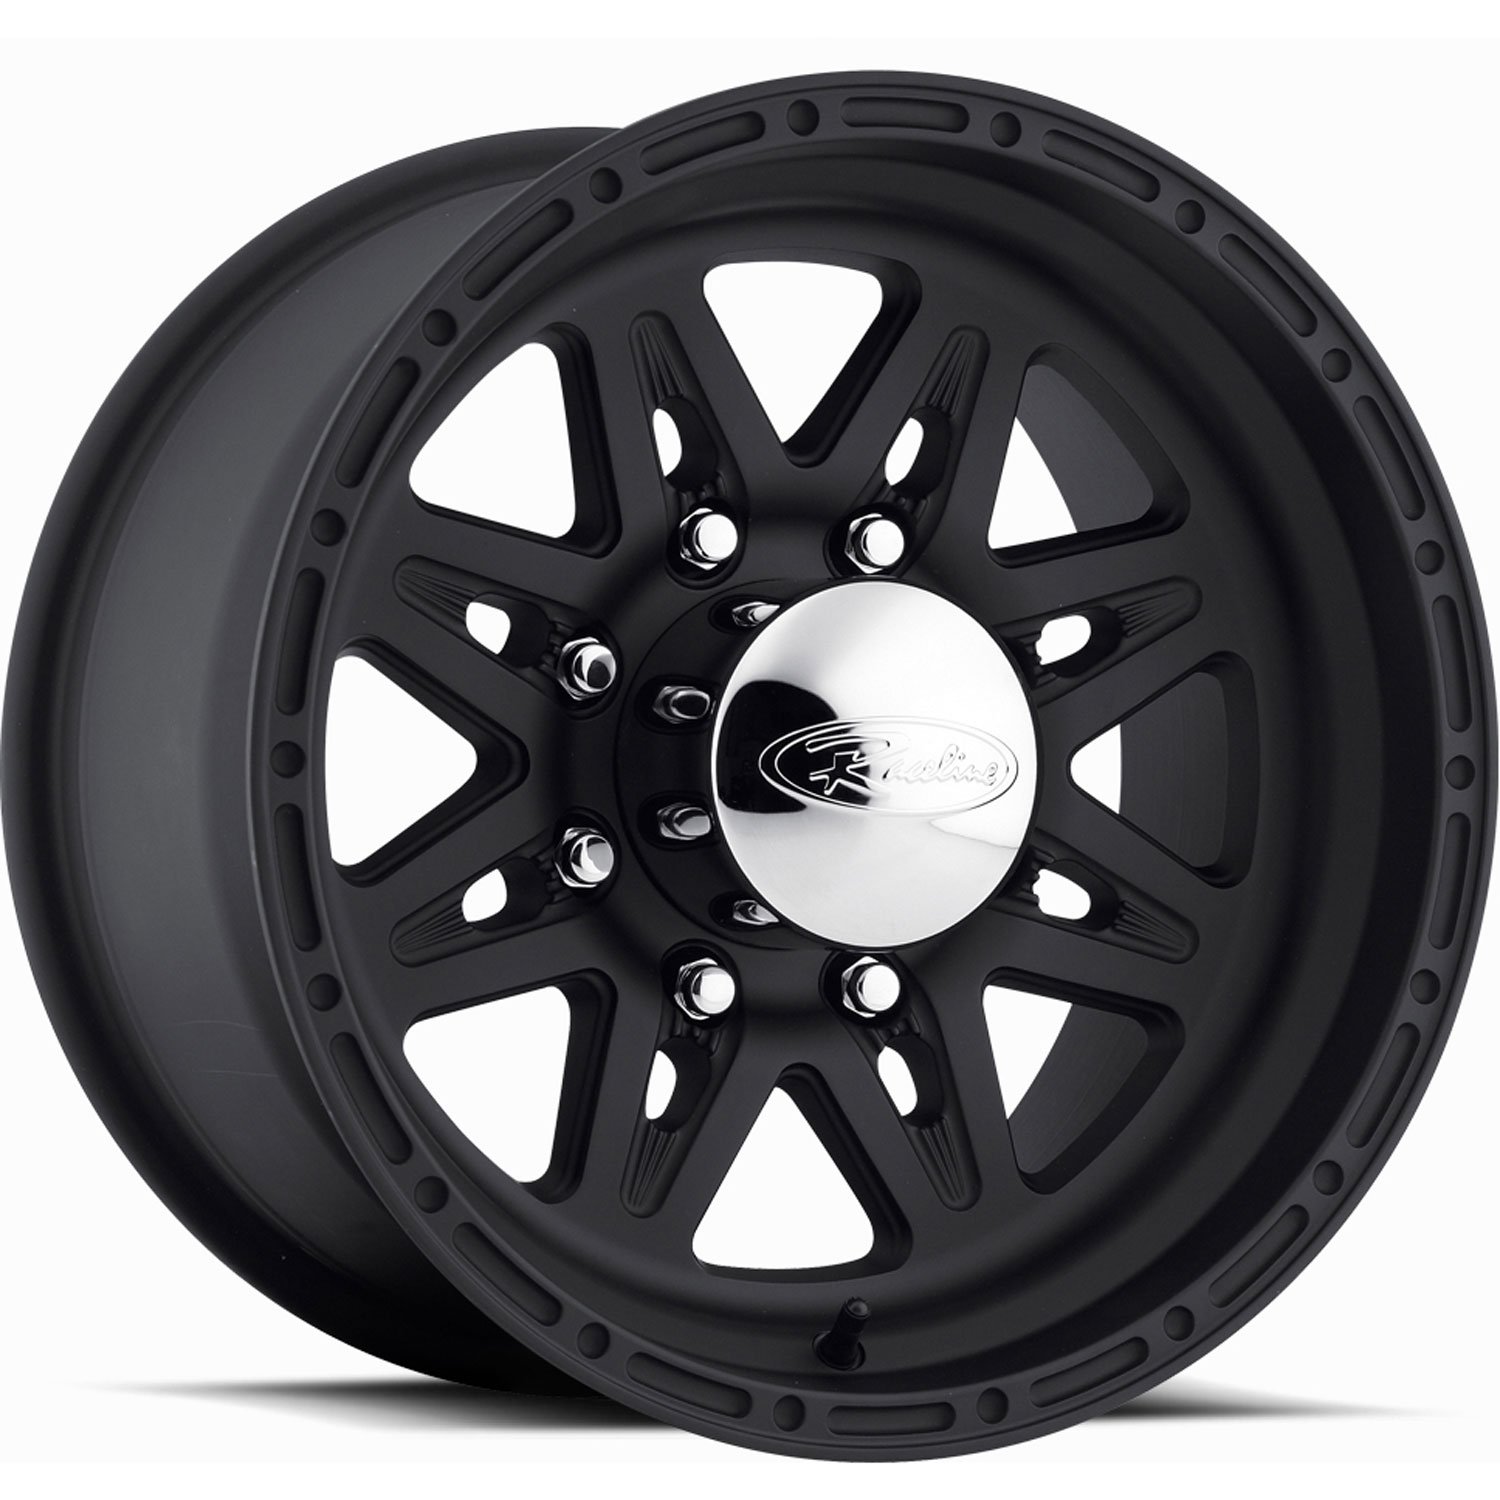 892 Renegade Wheel Size: 16 X 10" Bolt Pattern: 8X165.1 mm [Satin Black]